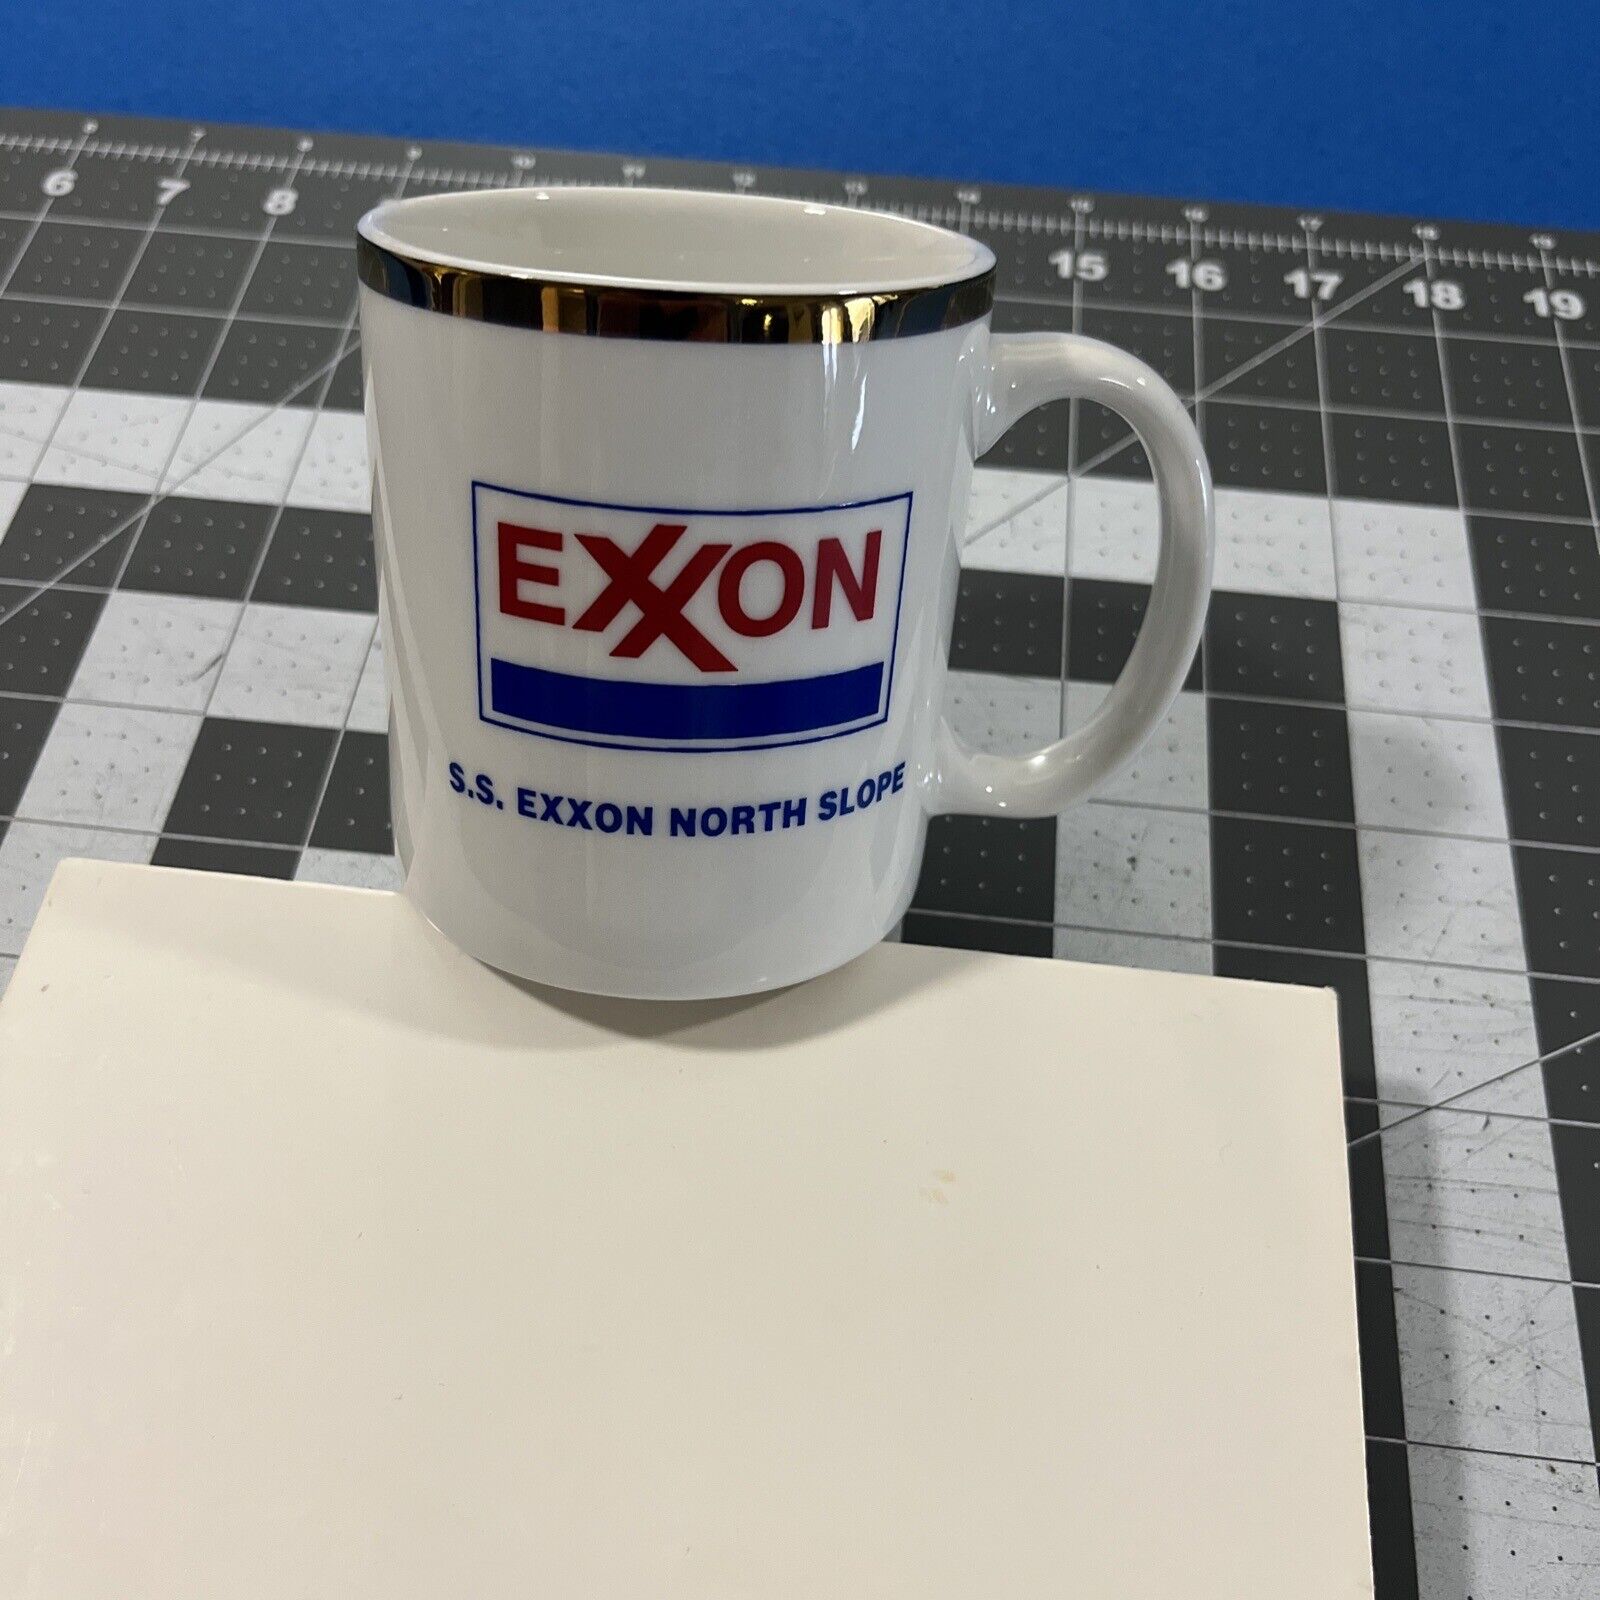 VTG Exxon Oil Coffee Mug / Cup - S.S. EXXON NORTH SLOPE